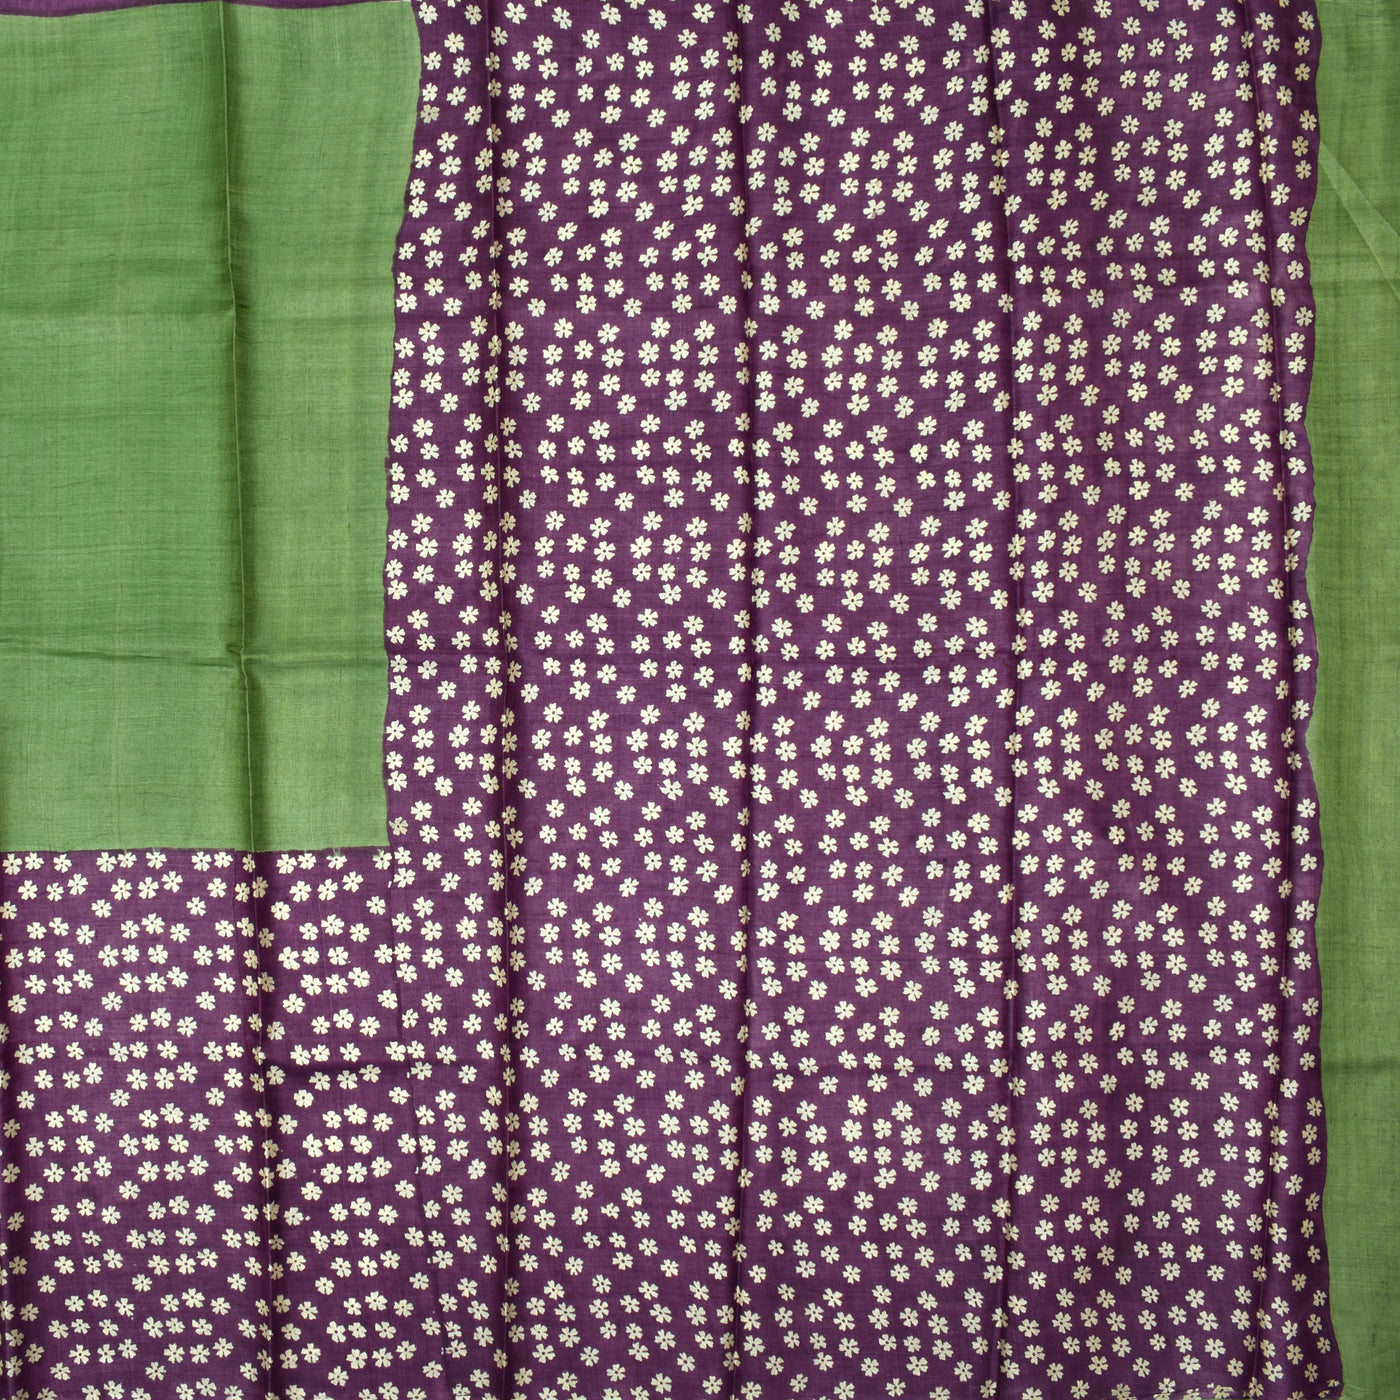 Apple Green Tussar Printed Saree with violet flower printed pallu